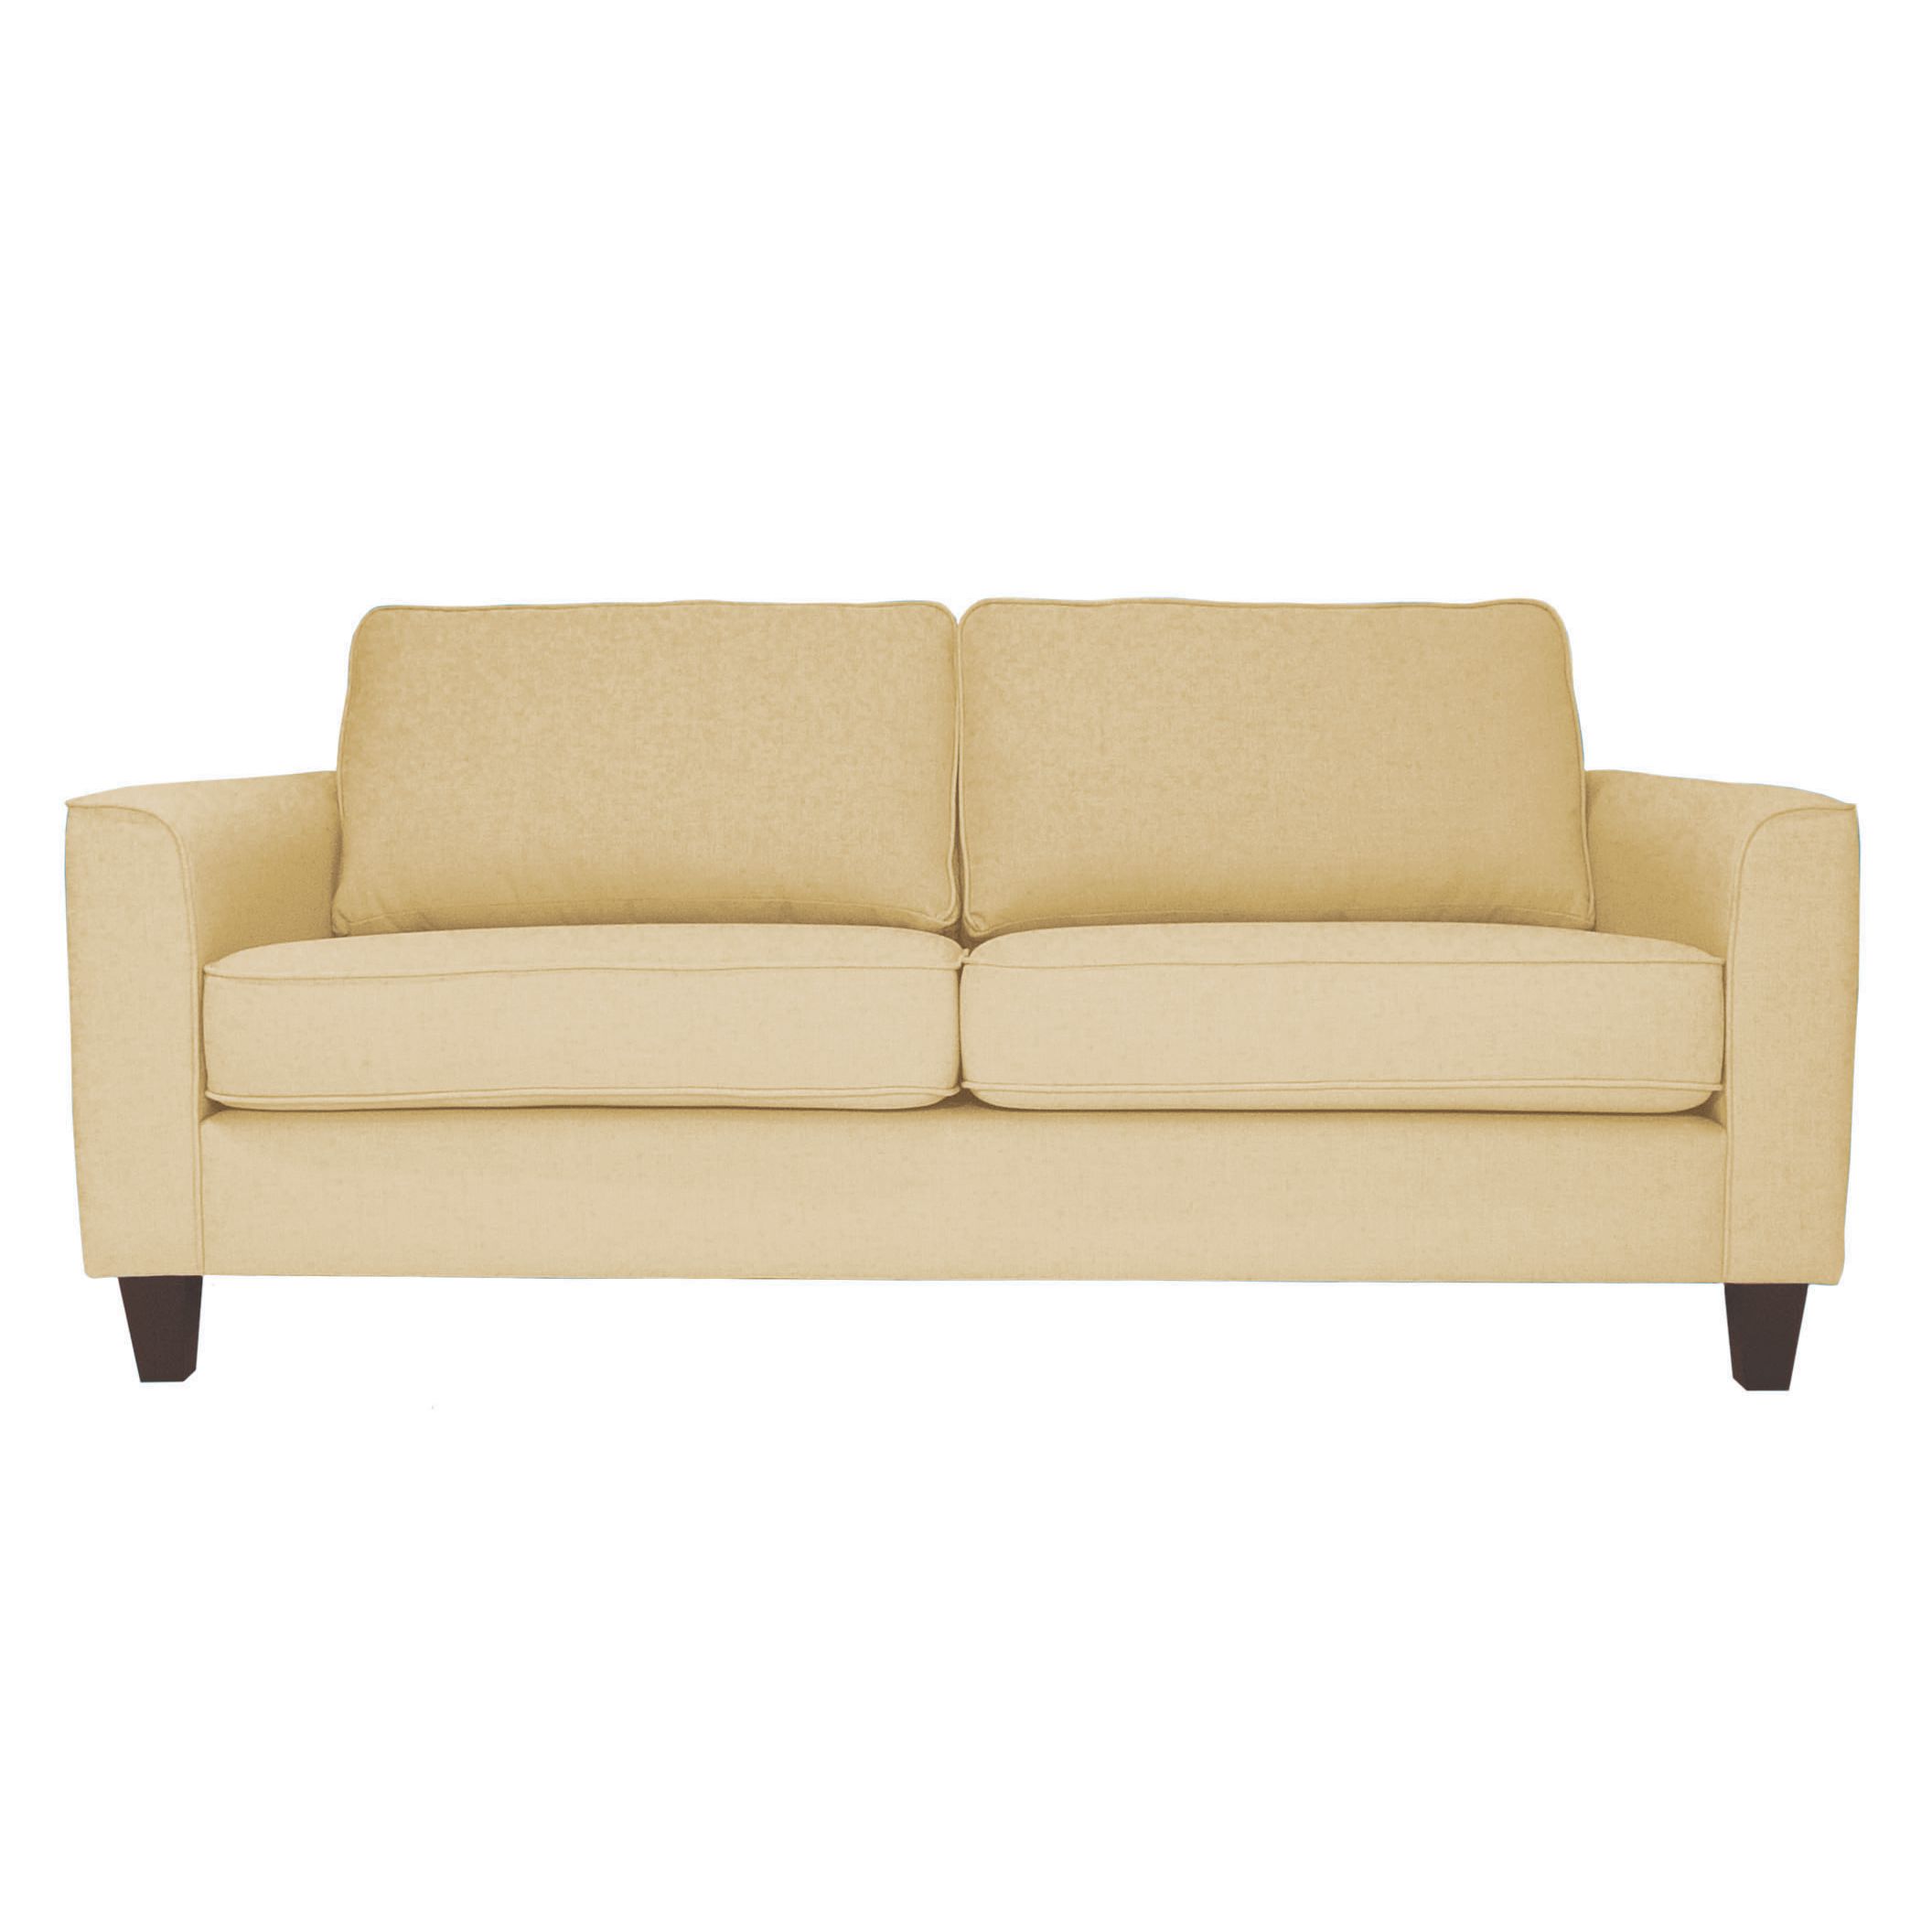 John Lewis Portia Medium Sofa, Camel / Dark Leg